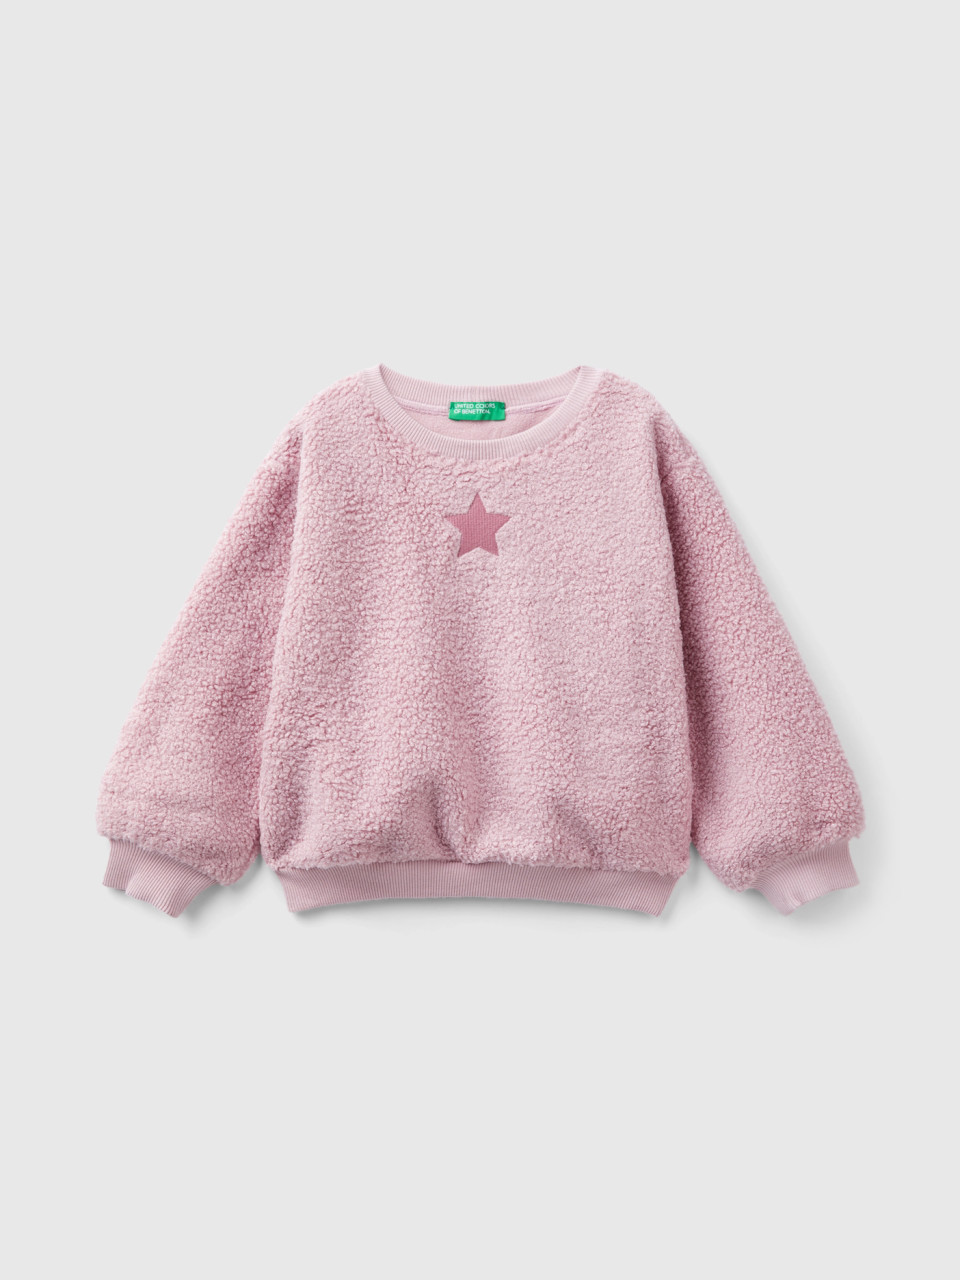 Benetton, Pullover Teddy Effect Sweatshirt, Pink, Kids